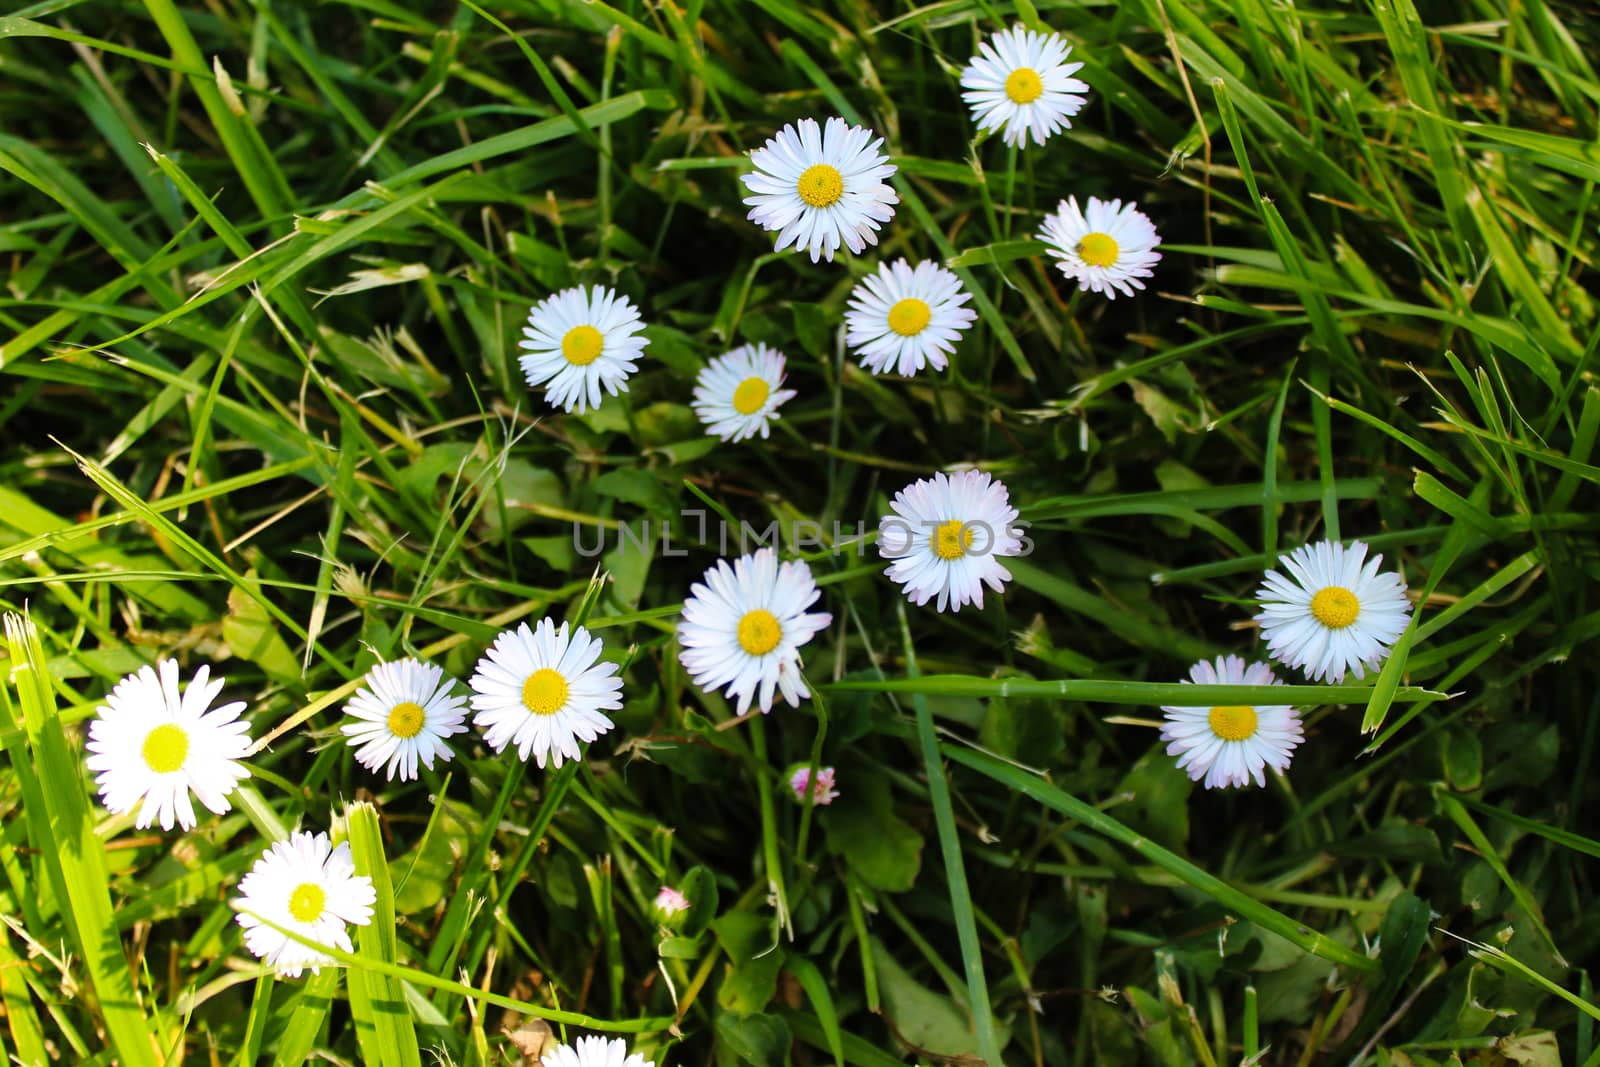 Bellis perennis, daisies in the grass. Beja, Portugal.